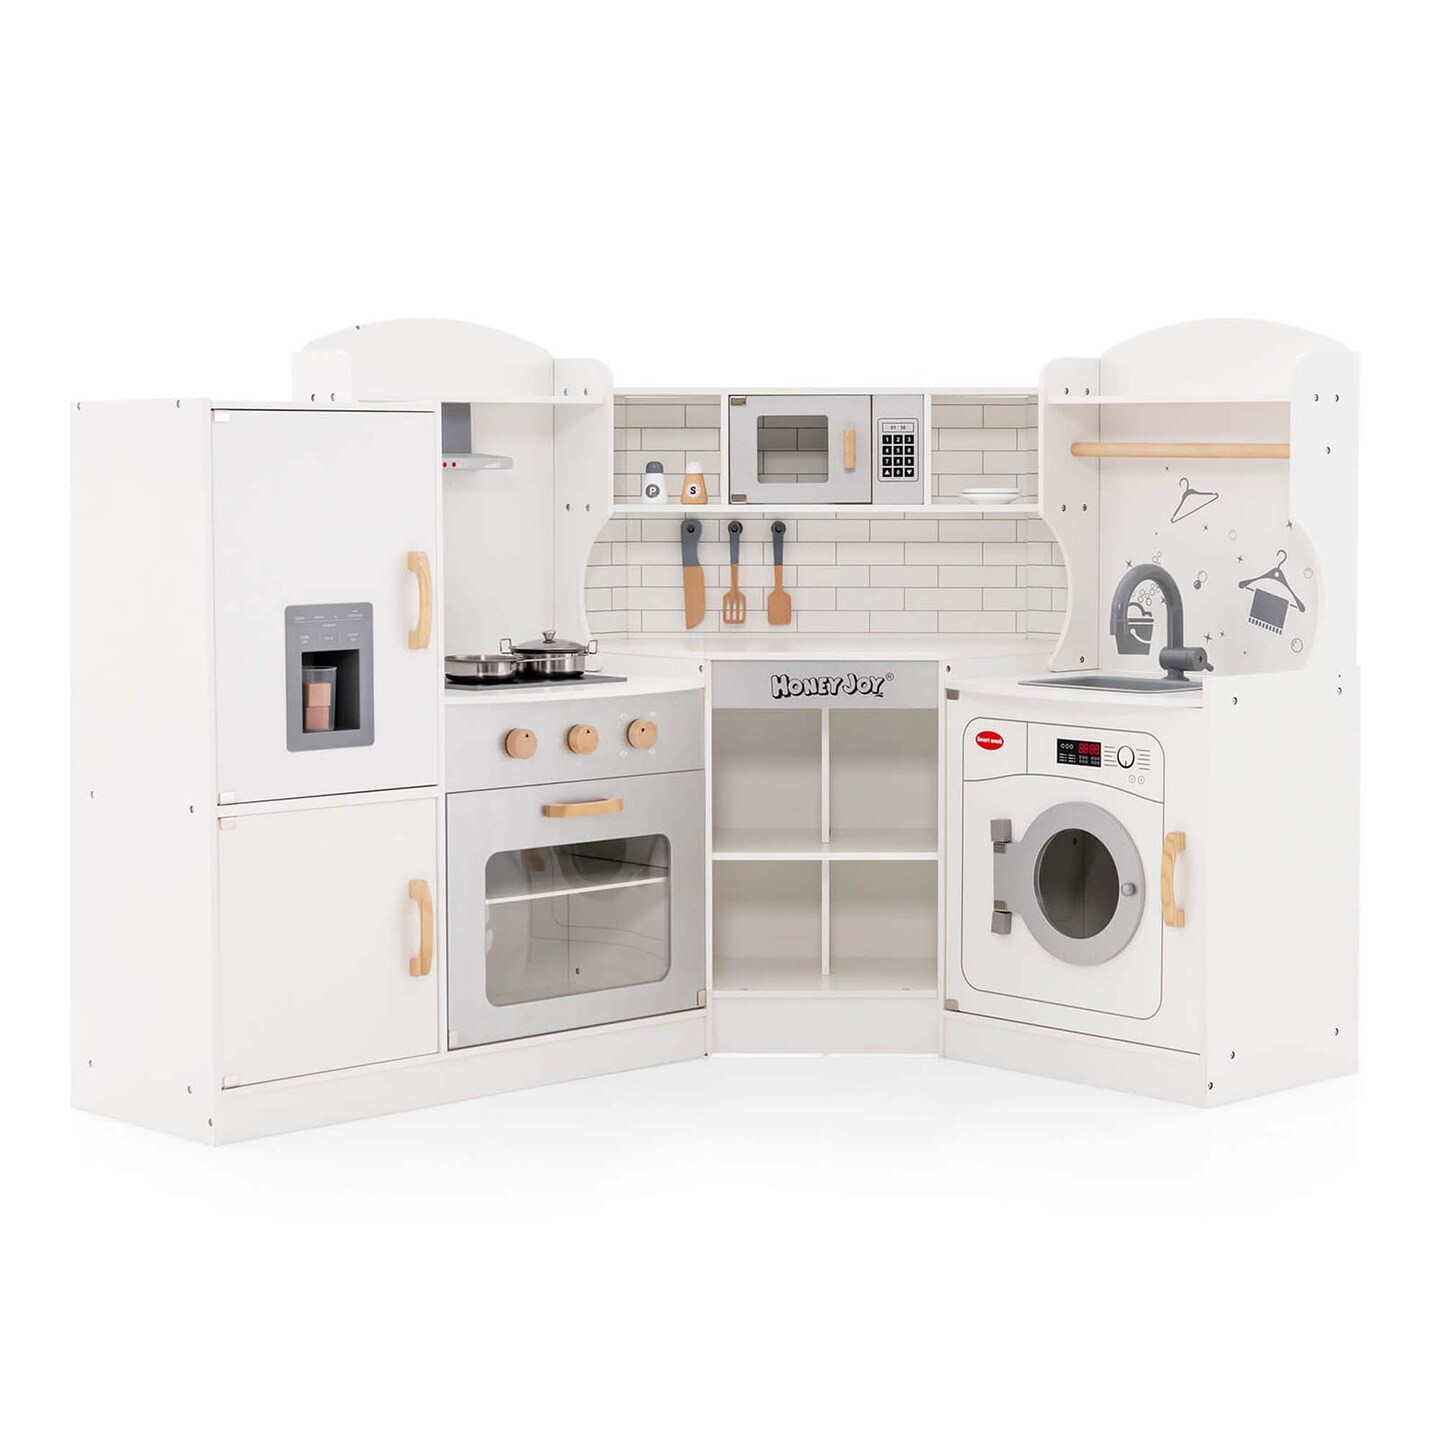 Honeyjoy Corner Play Kitchen Toddler Kitchen Playset with Range Hood, Ice Maker, Microwave